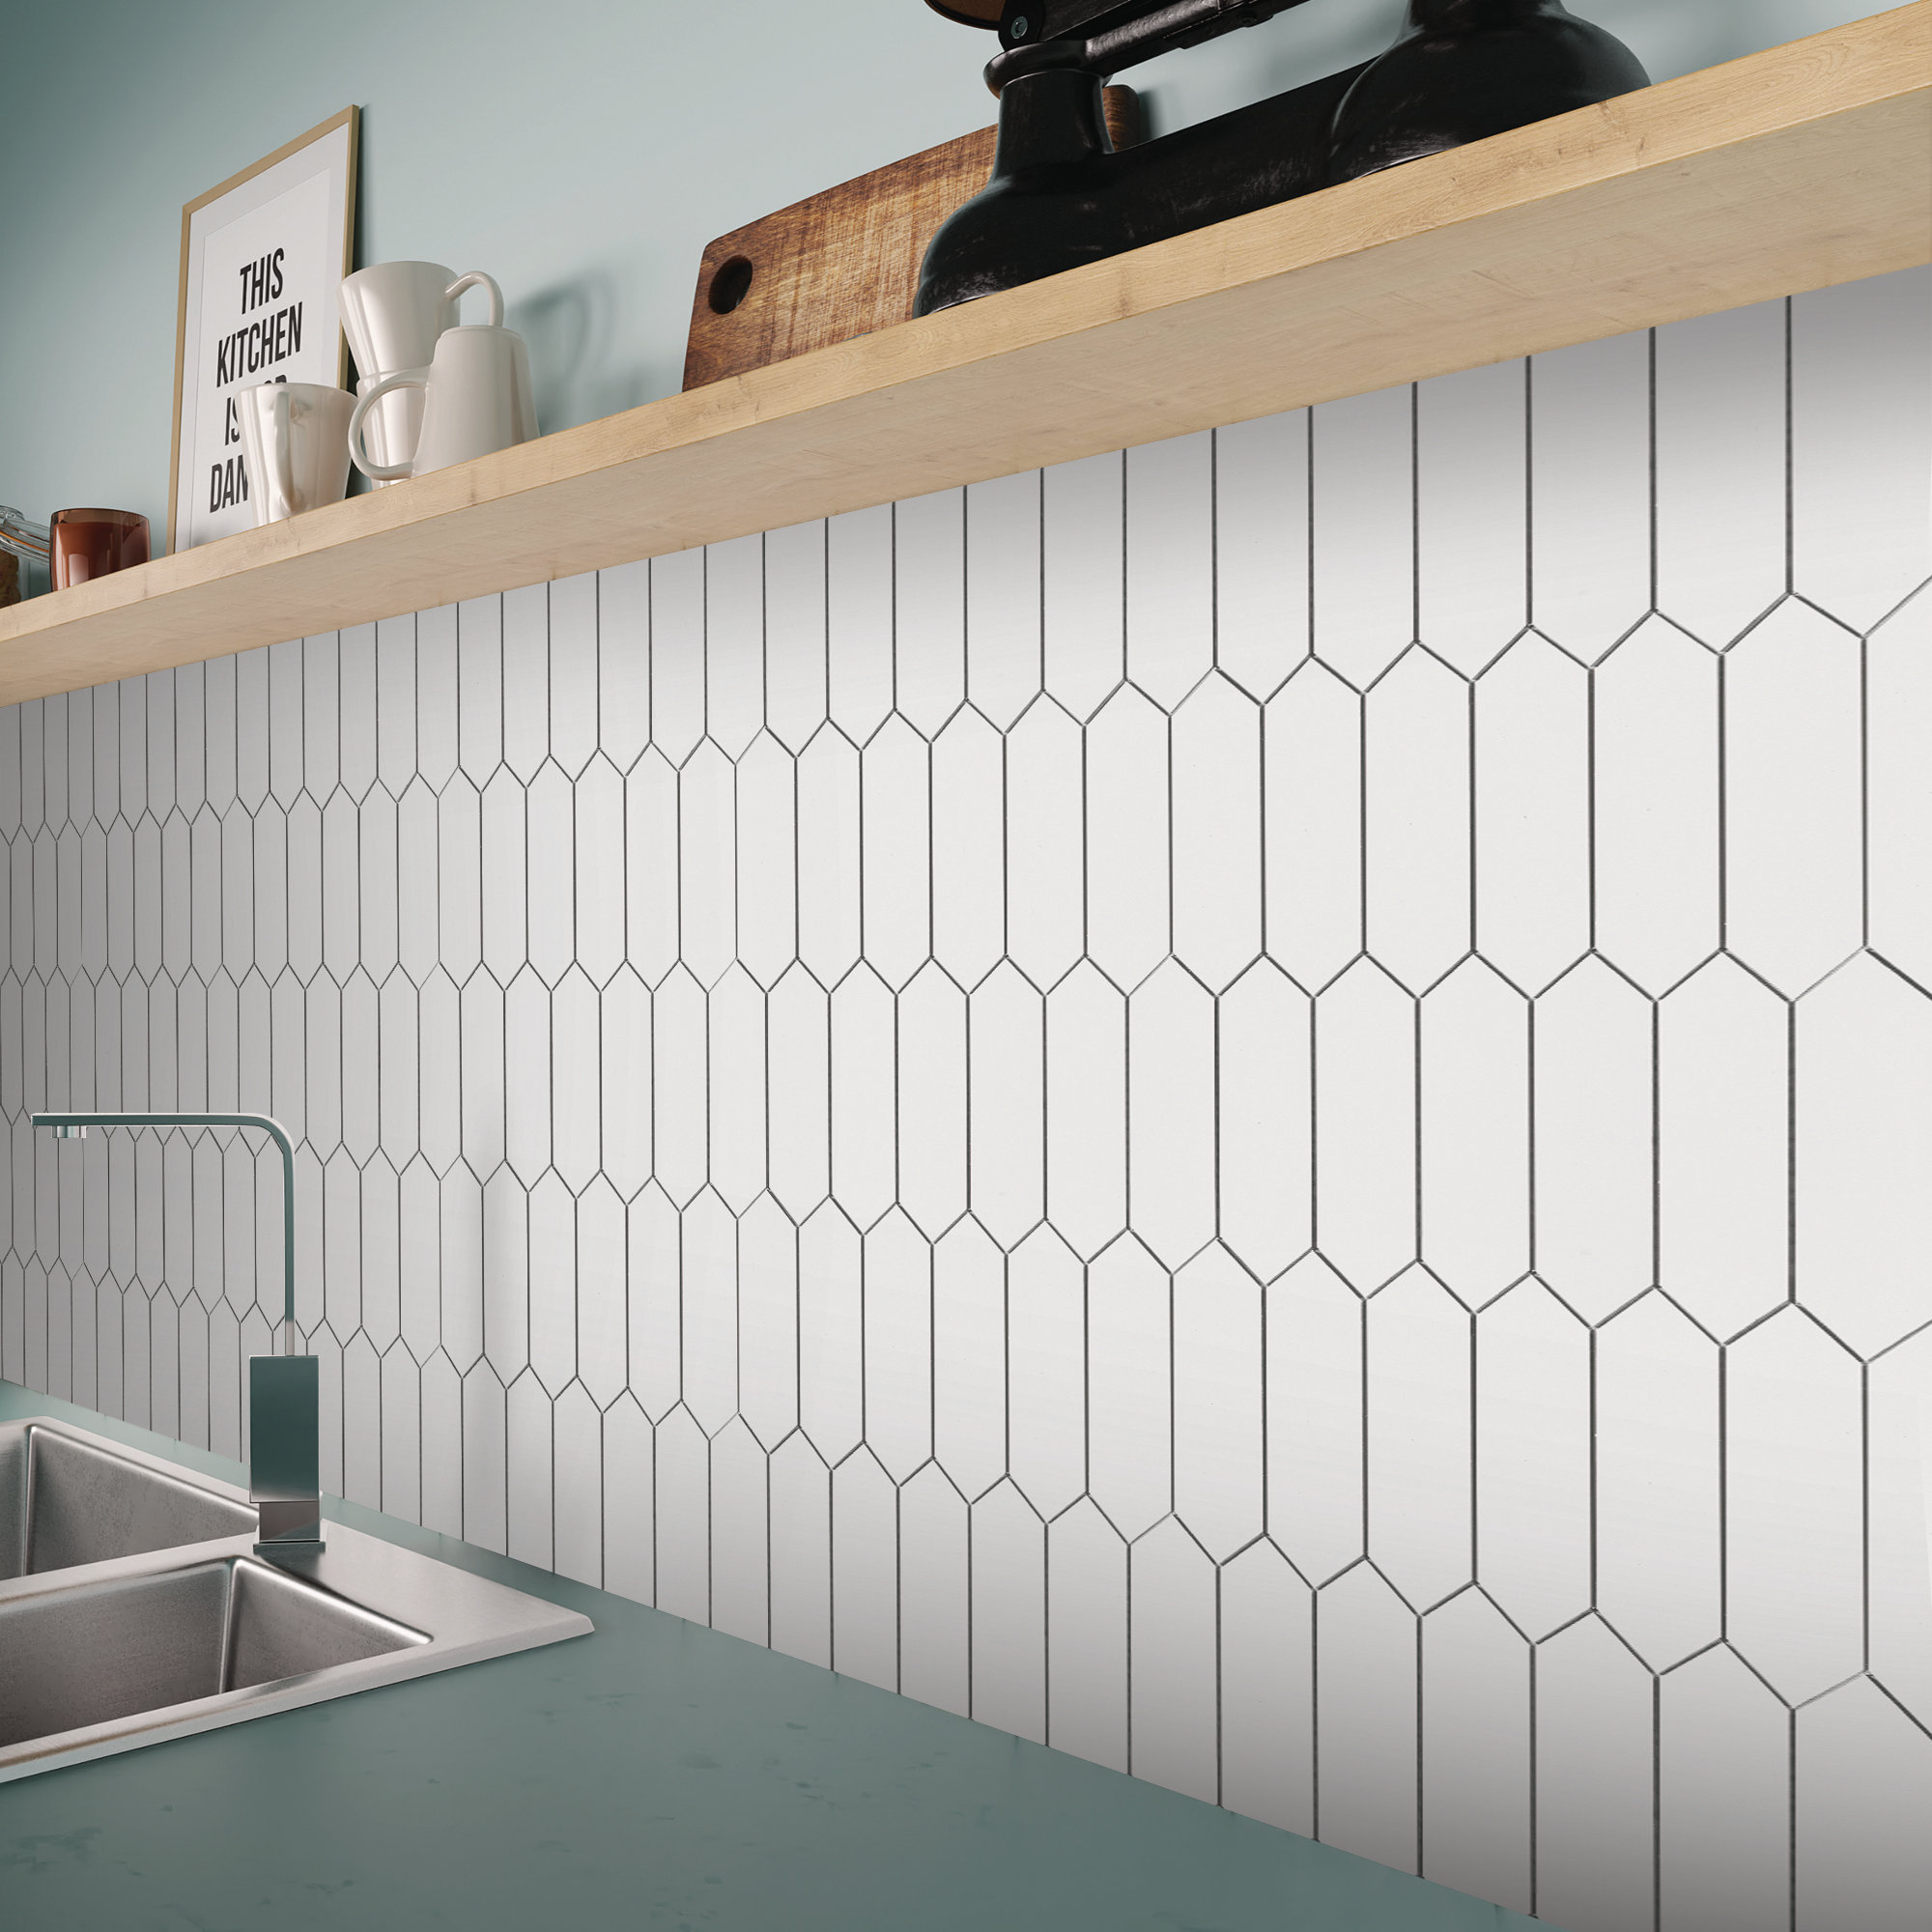 20-Sheet Peel and Stick Tile Backsplash for Kitchen Wall, Self Black/Gray